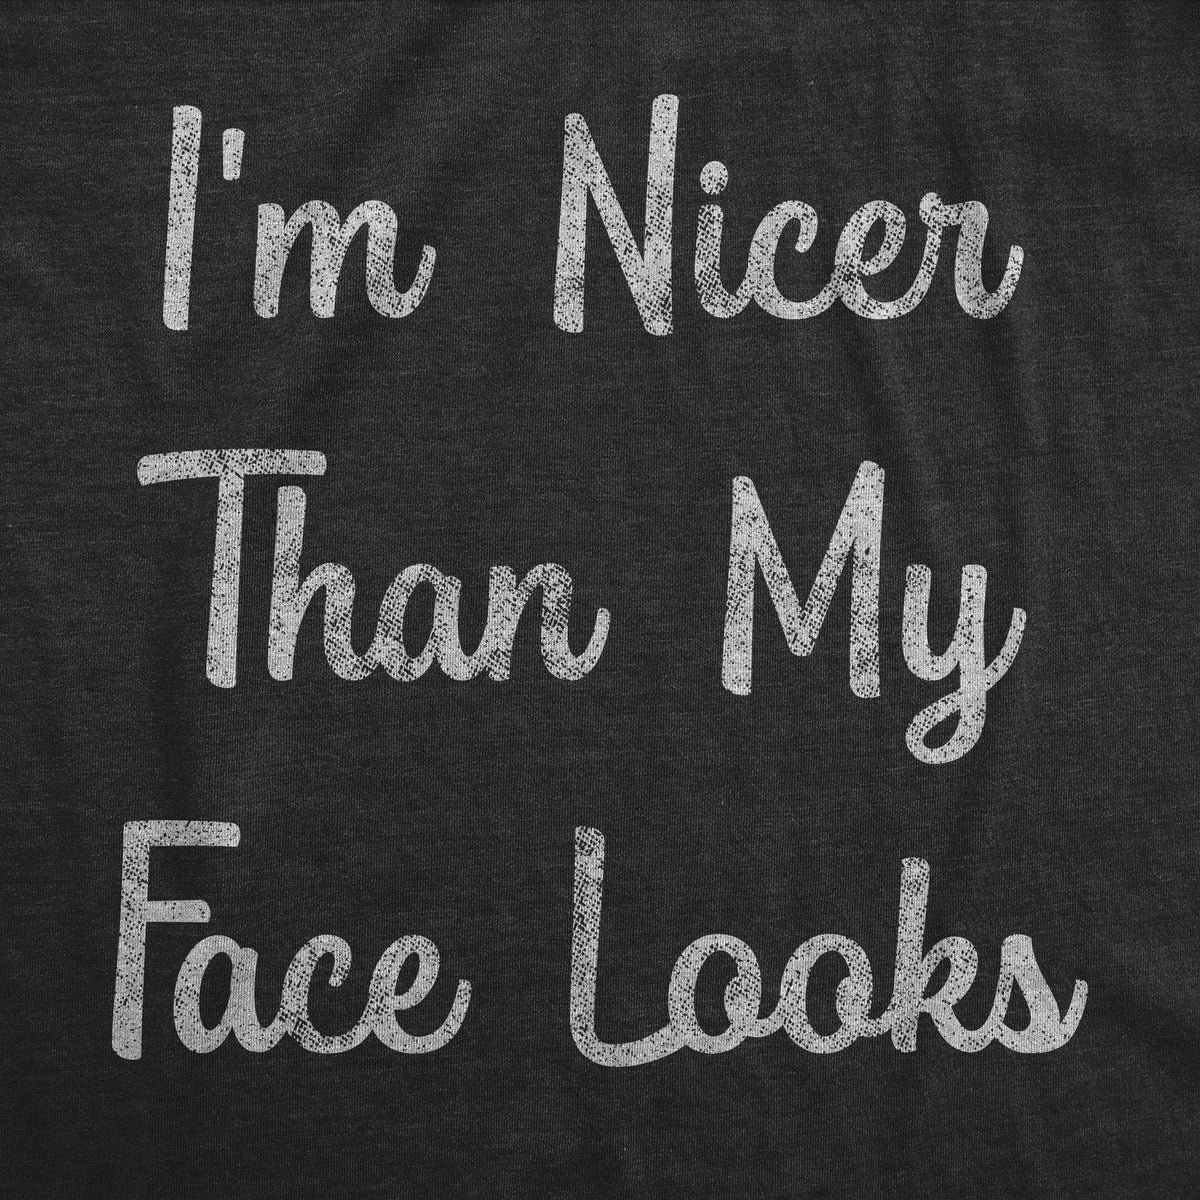 I&#39;m Nicer Than My Face Looks Women&#39;s Tshirt - Crazy Dog T-Shirts